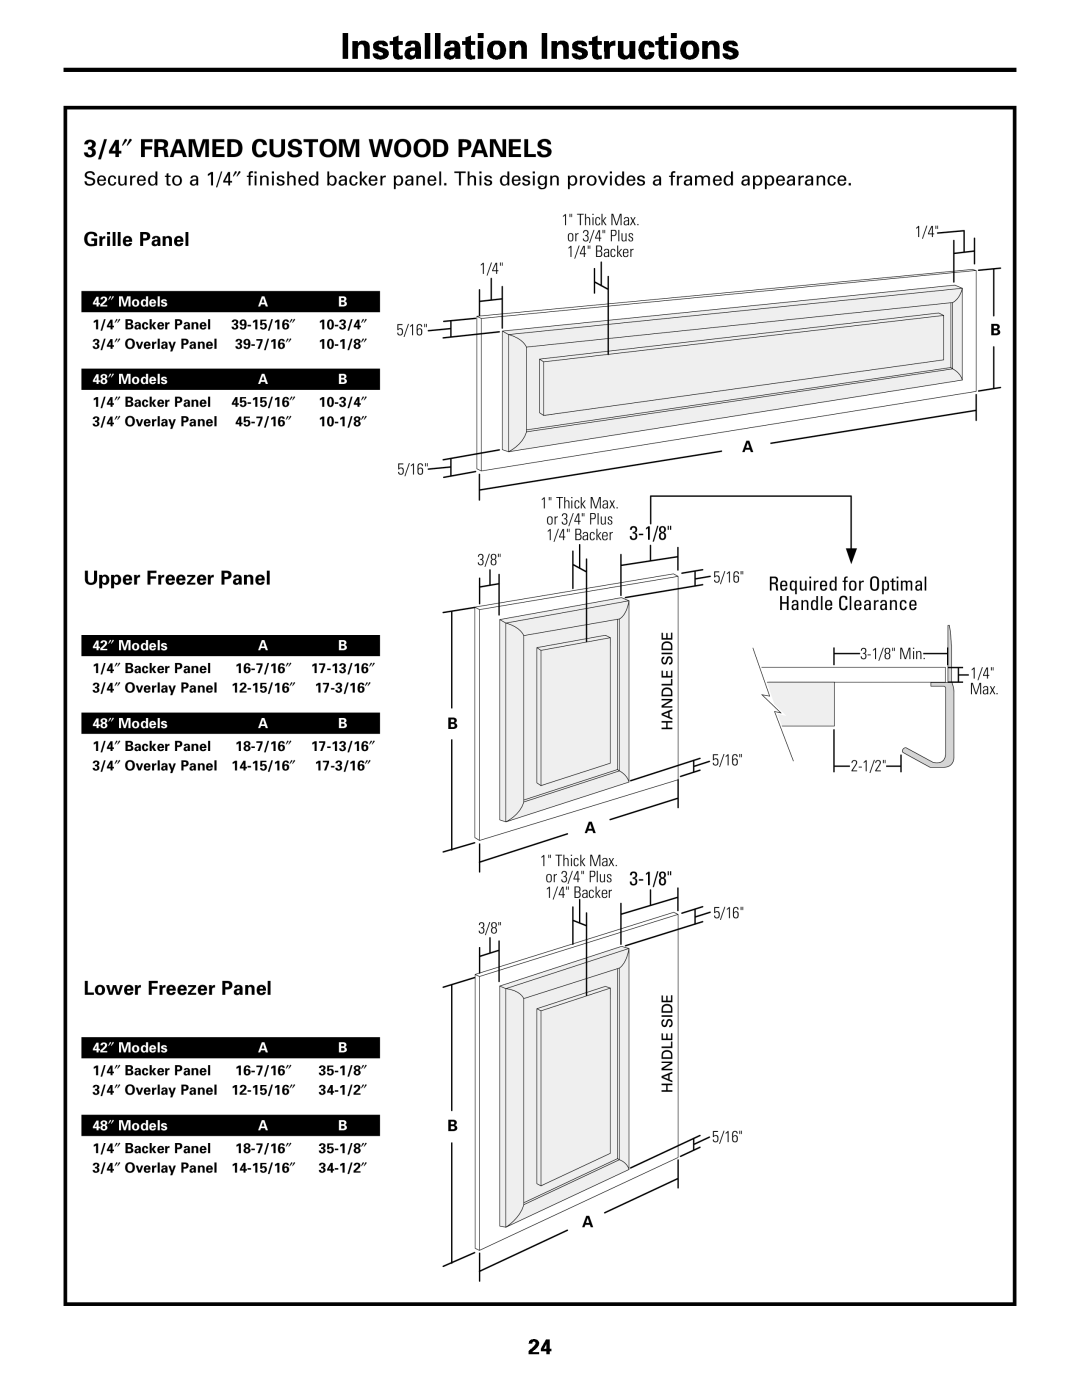 GE 42 Installation Instructions, 3/4″ FRAMED CUSTOM WOOD PANELS, Grille Panel, Upper Freezer Panel, Lower Freezer Panel 